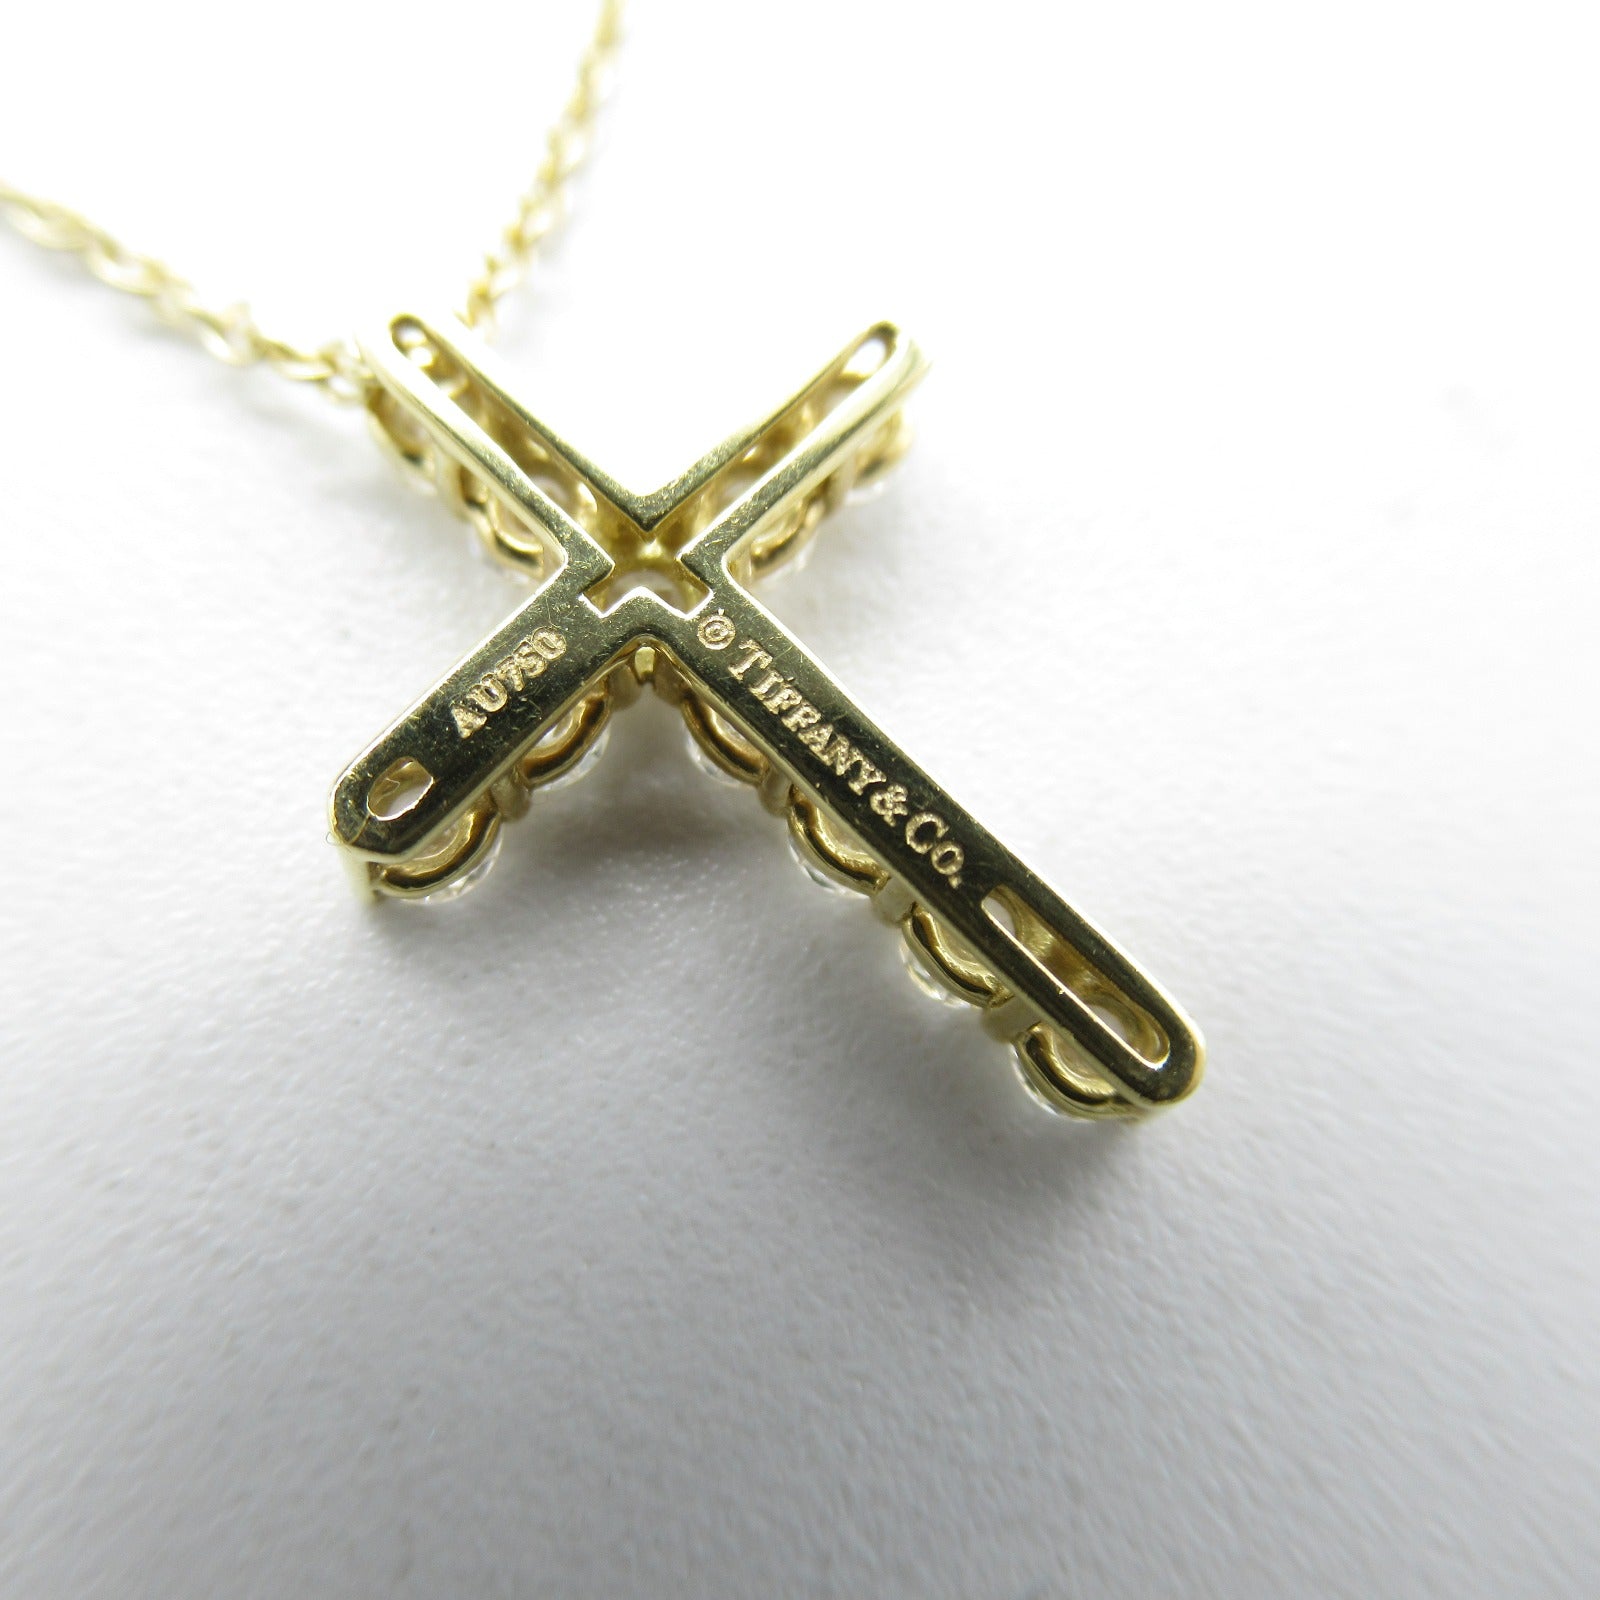 TIFFANY&CO Small Cross Diamond Necklace K18 (Yellow G) Diamond  Clearance